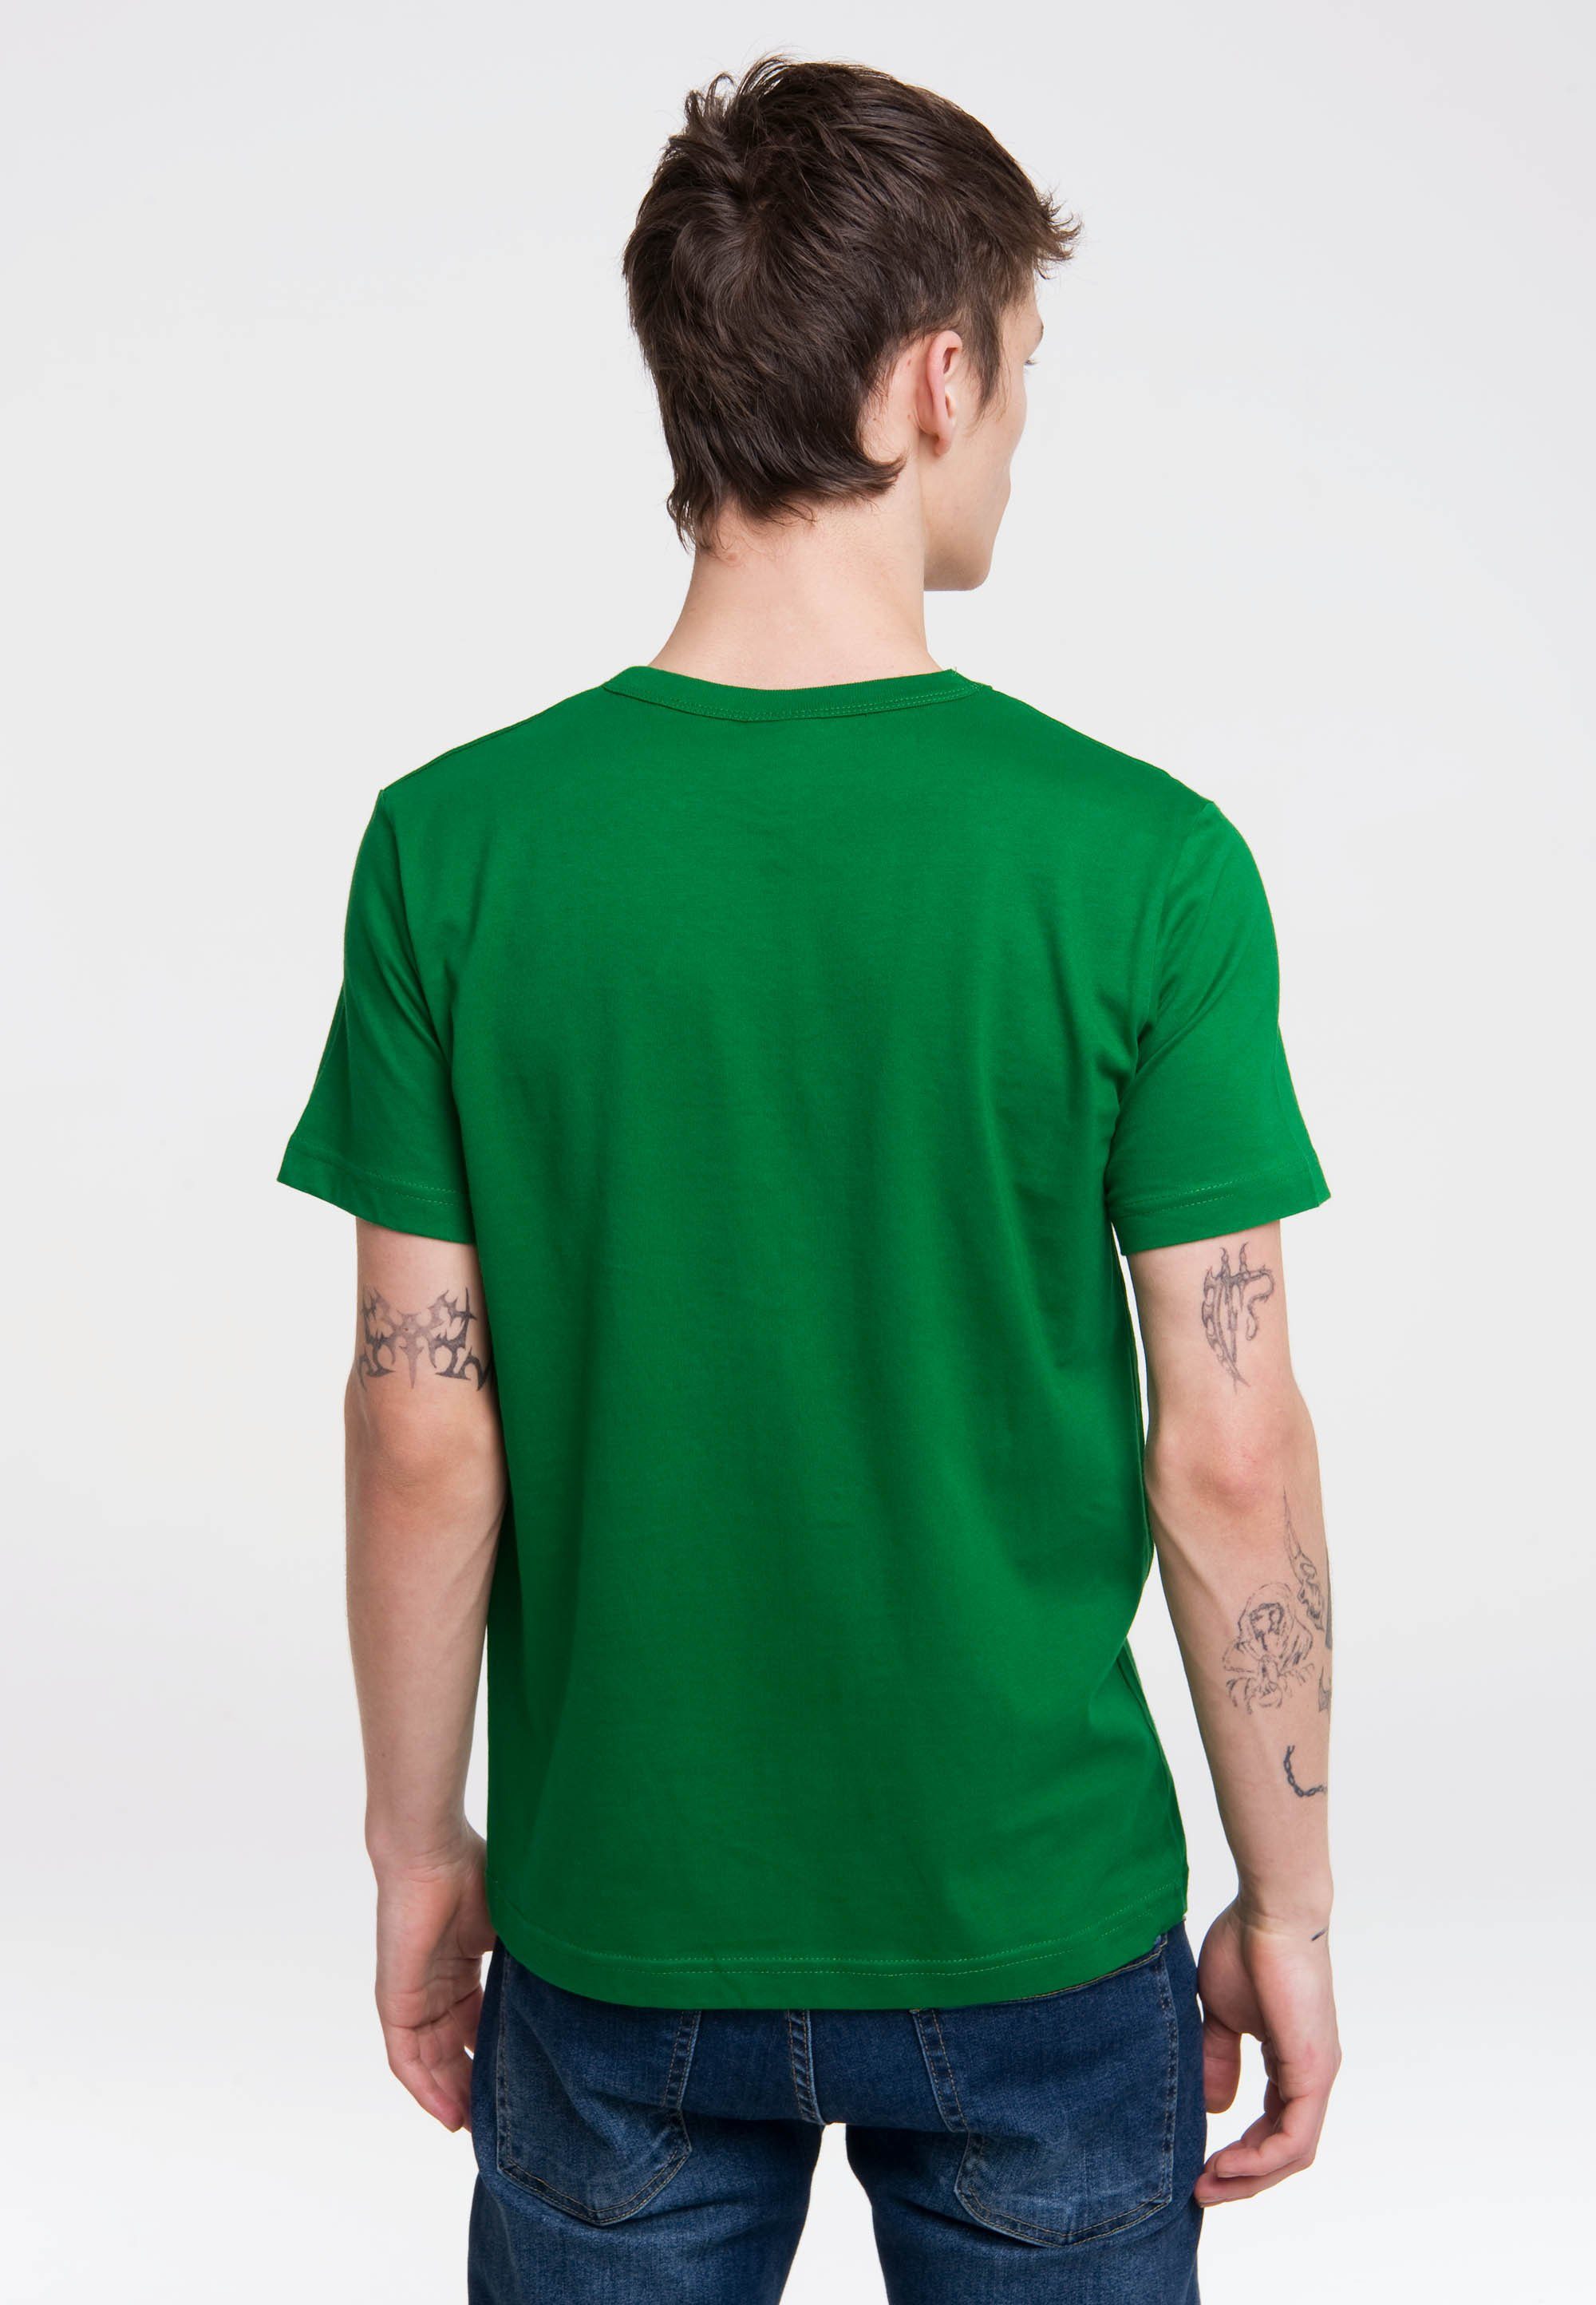 T-Shirt Green coolem Print LOGOSHIRT mit Arrow